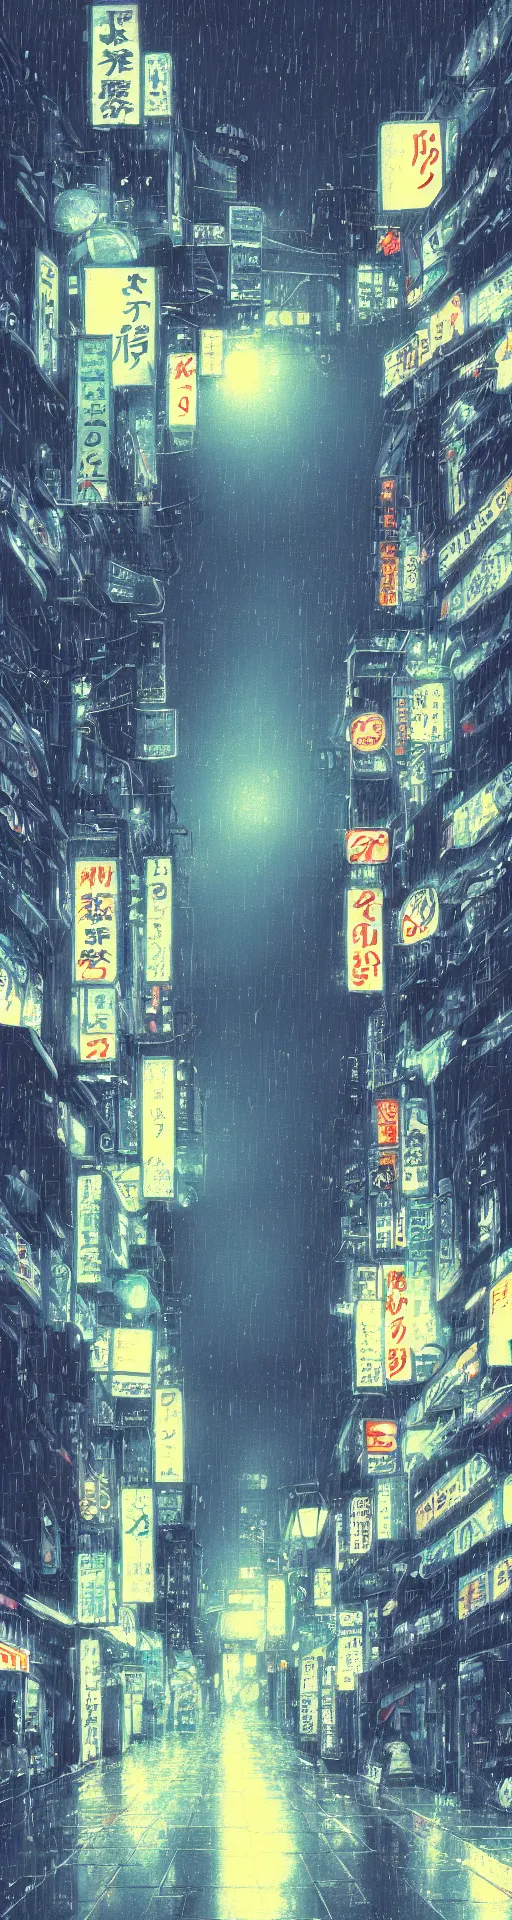 Prompt: Rainy street corner in Tokyo at night by Makoto Shinkai, anime style, studio ghibli